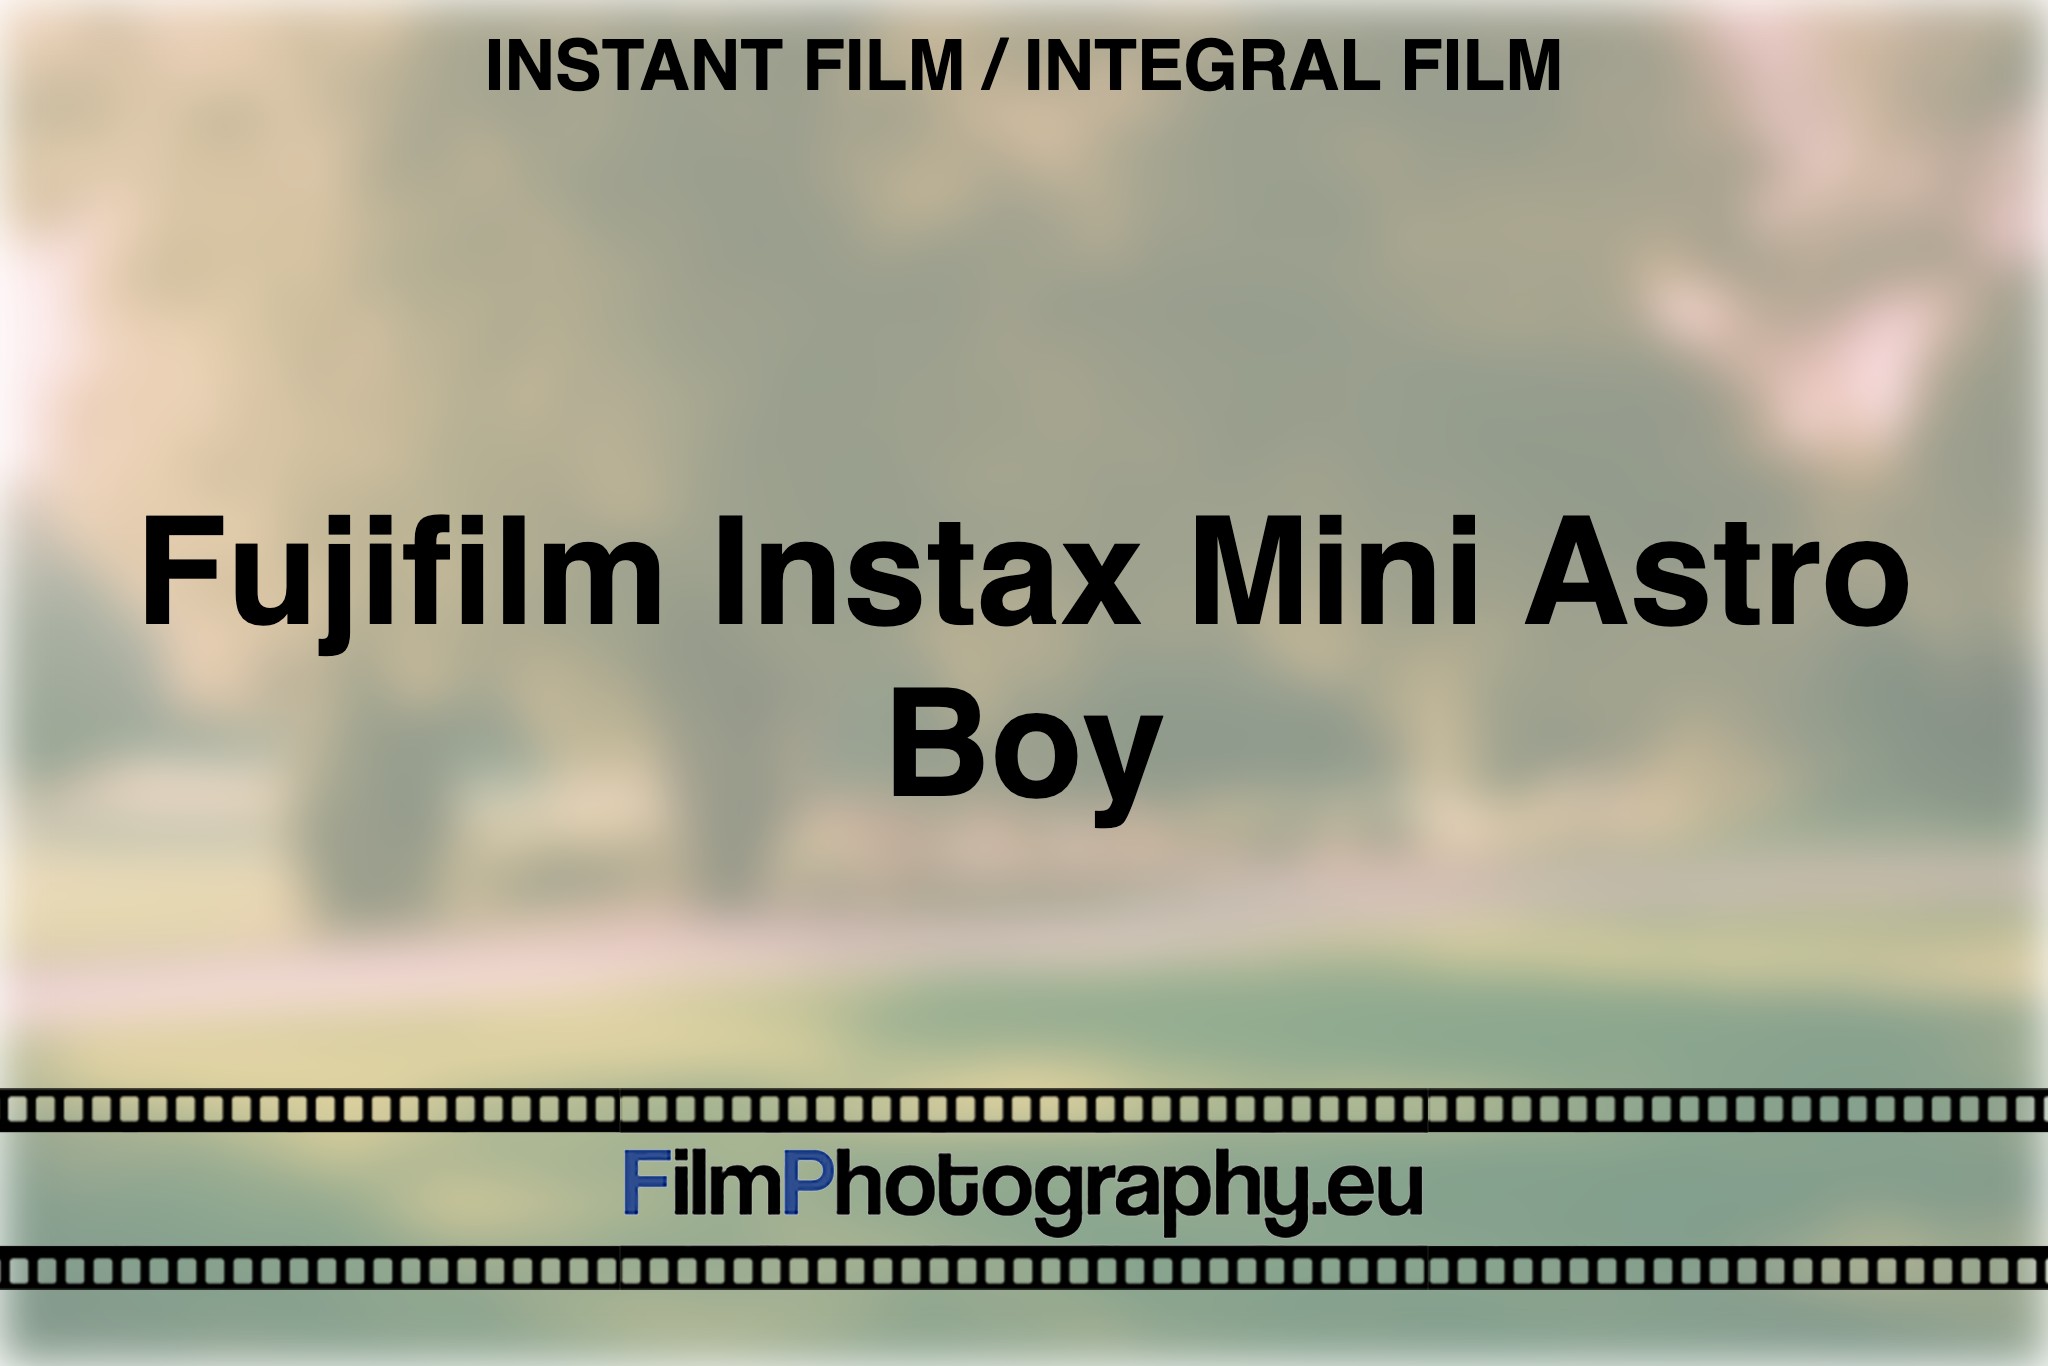 fujifilm-instax-mini-astro-boy-instant-film-integral-film-bnv